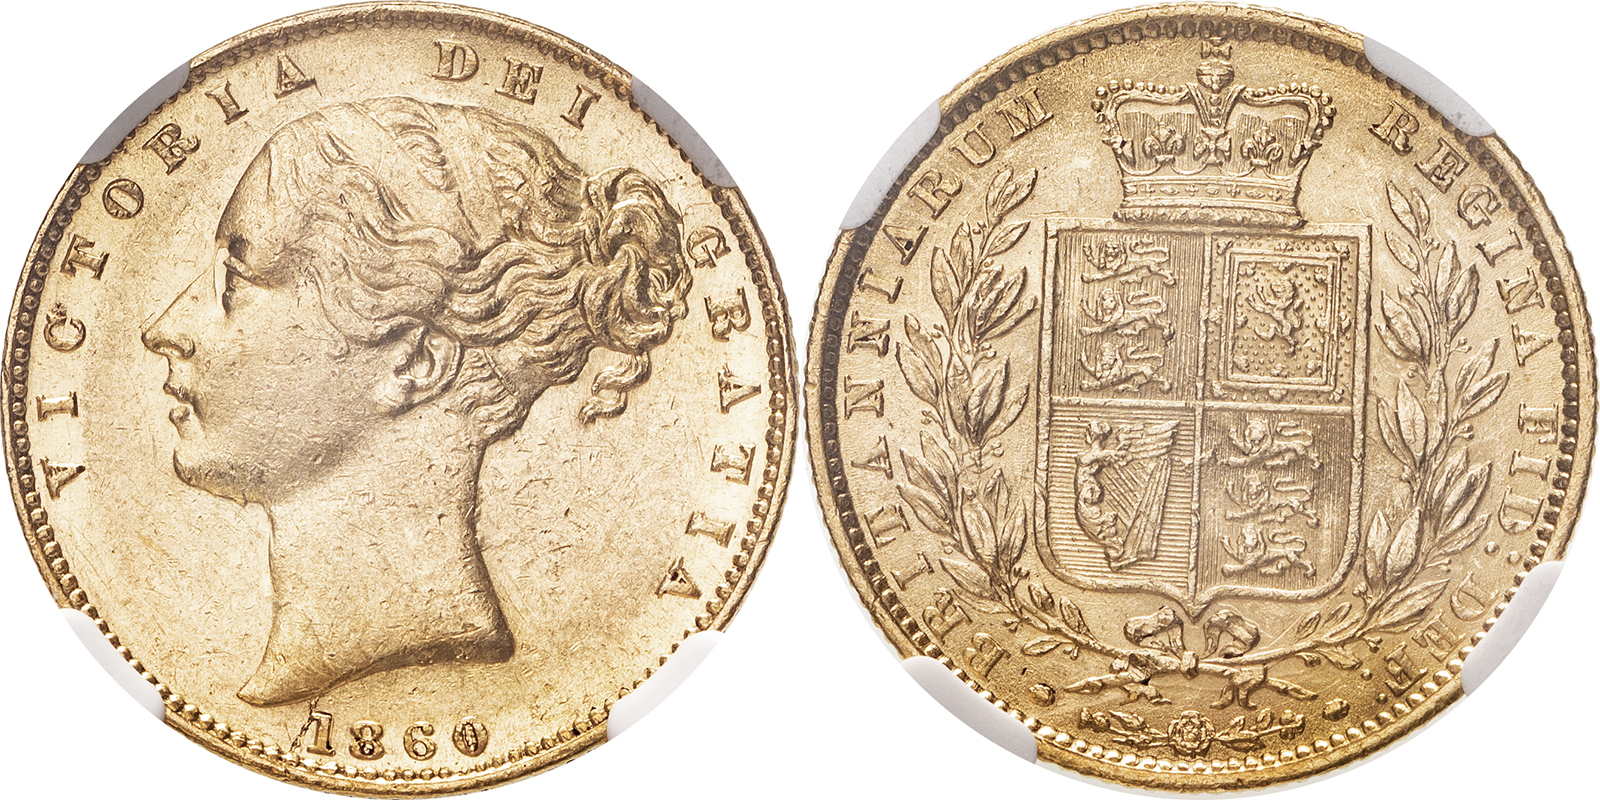 Lot 22: United Kingdom Victoria 1860 Gold Sovereign Inverted A for V NGC AU 58 #5786663-017 (AGW=0.2355 oz.)